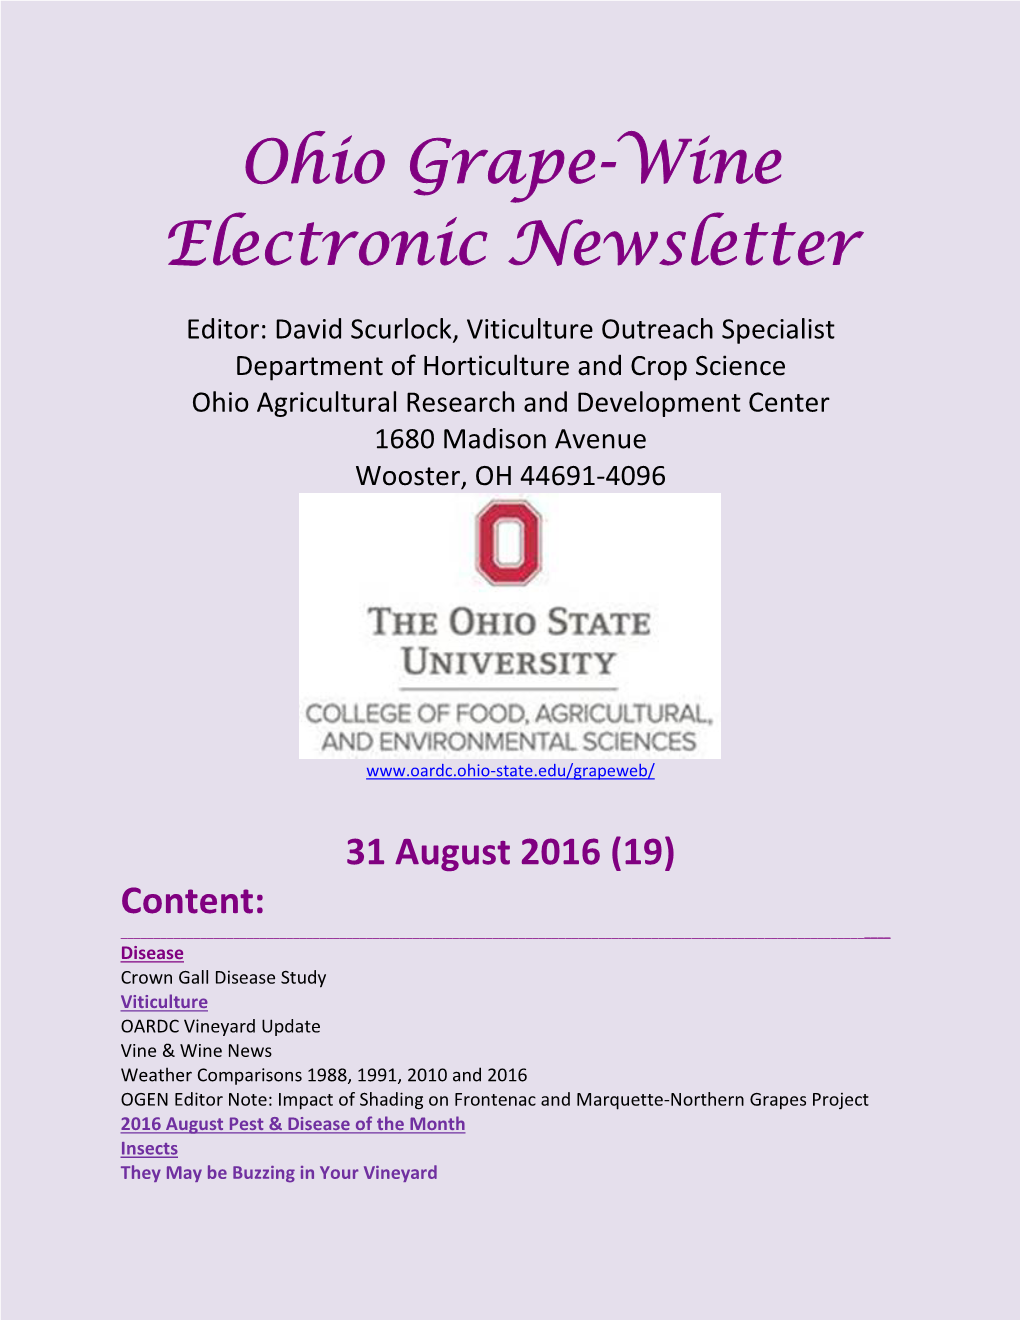 Ohio Grape-Wine Electronic Newsletter